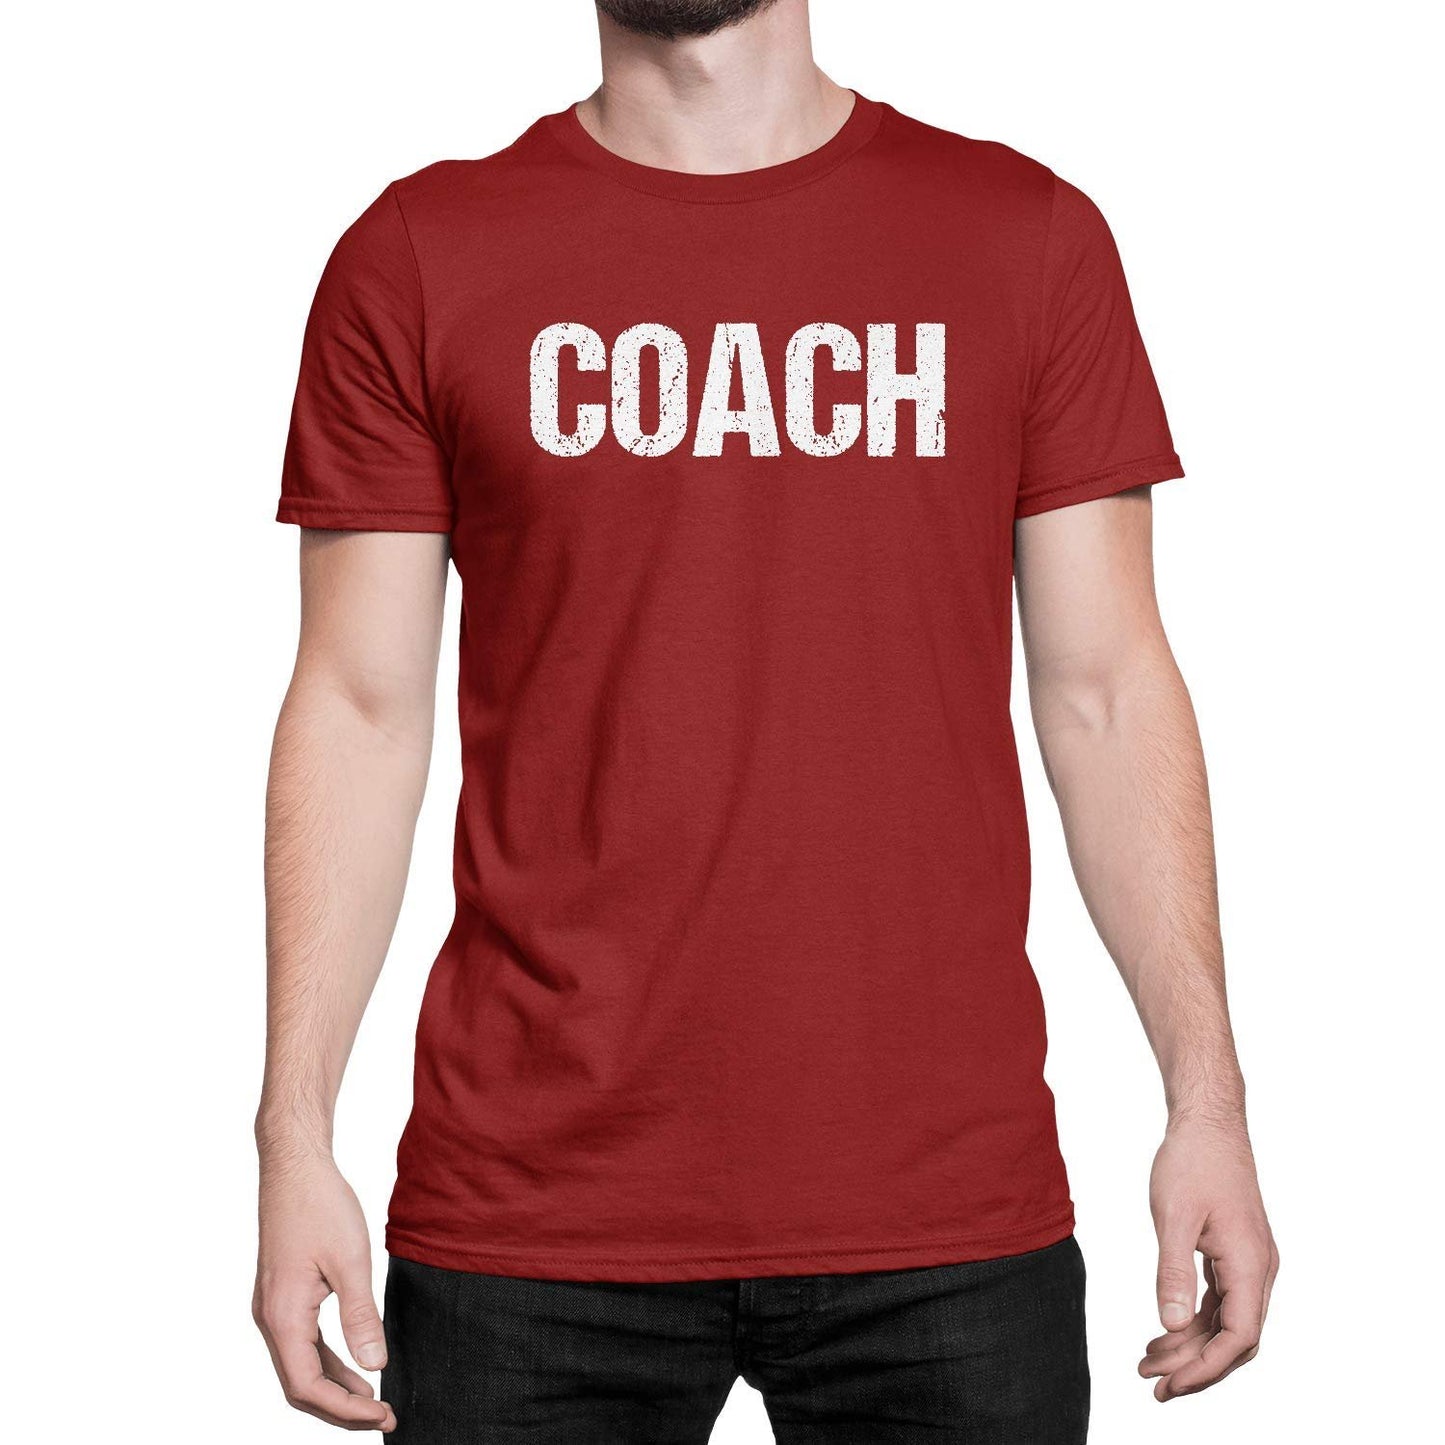 Coach T-Shirt Adult Mens Tee Shirt Front Screen Printed Coaching Tshirt Maroon & hite